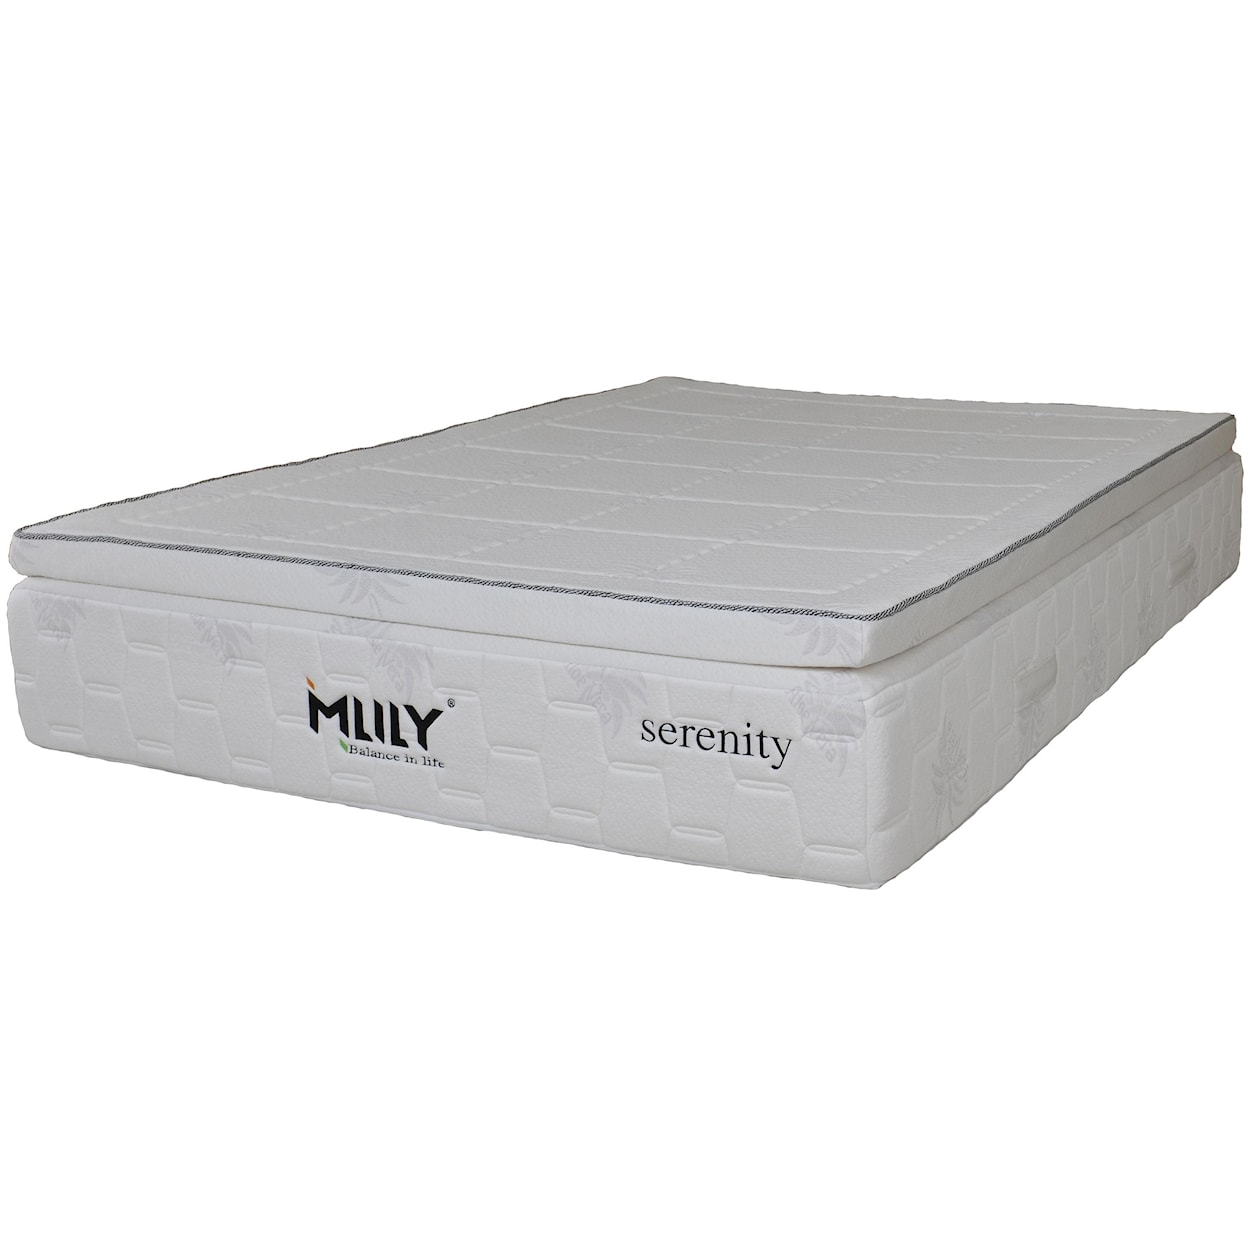 MLILY Serenity Twin XL Memory Foam Mattress